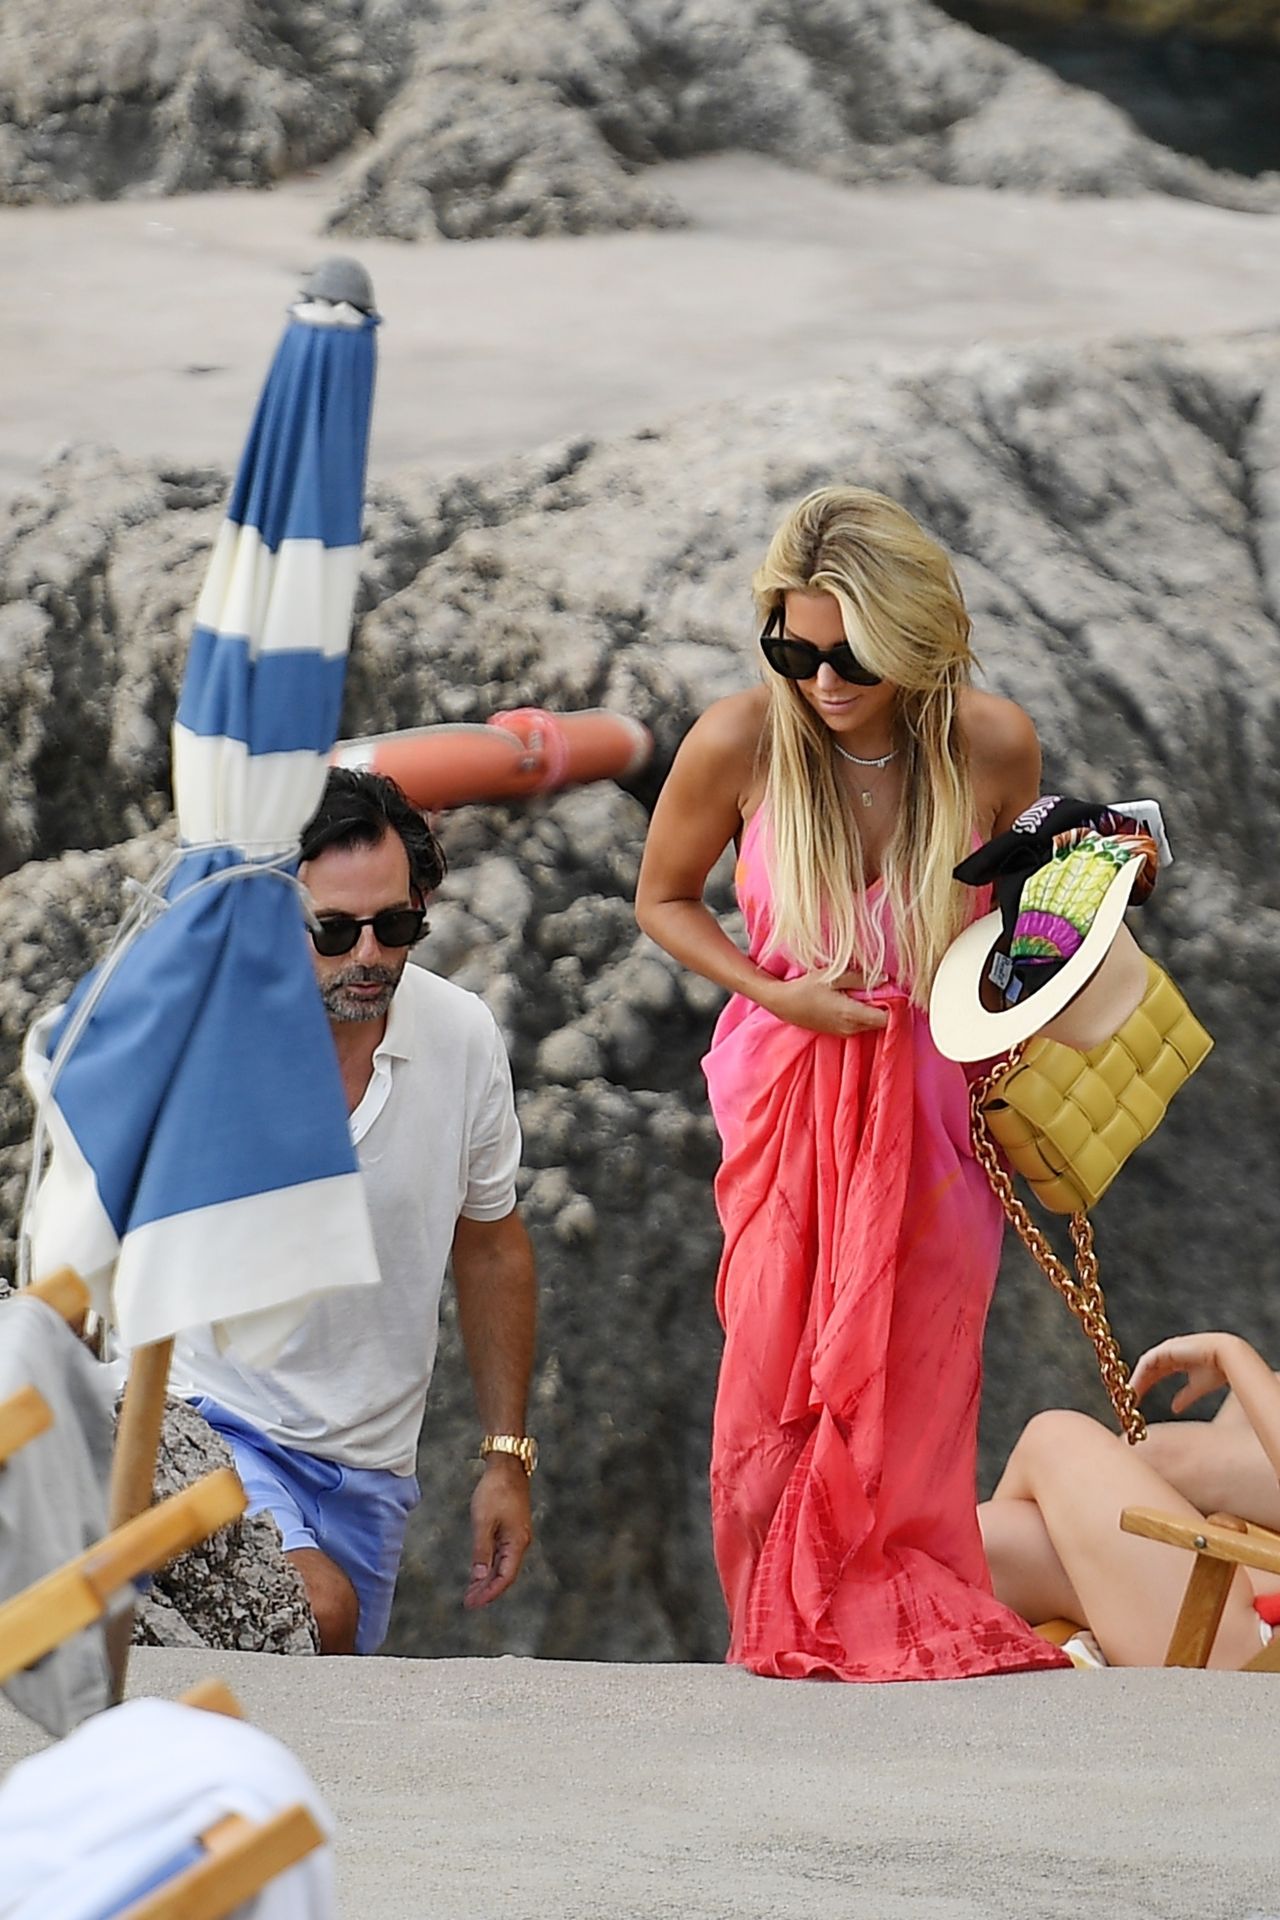 Sylvie Meis & Niclas Castello Are Spotted During Their Honeymoon in Capri (42 Photos)